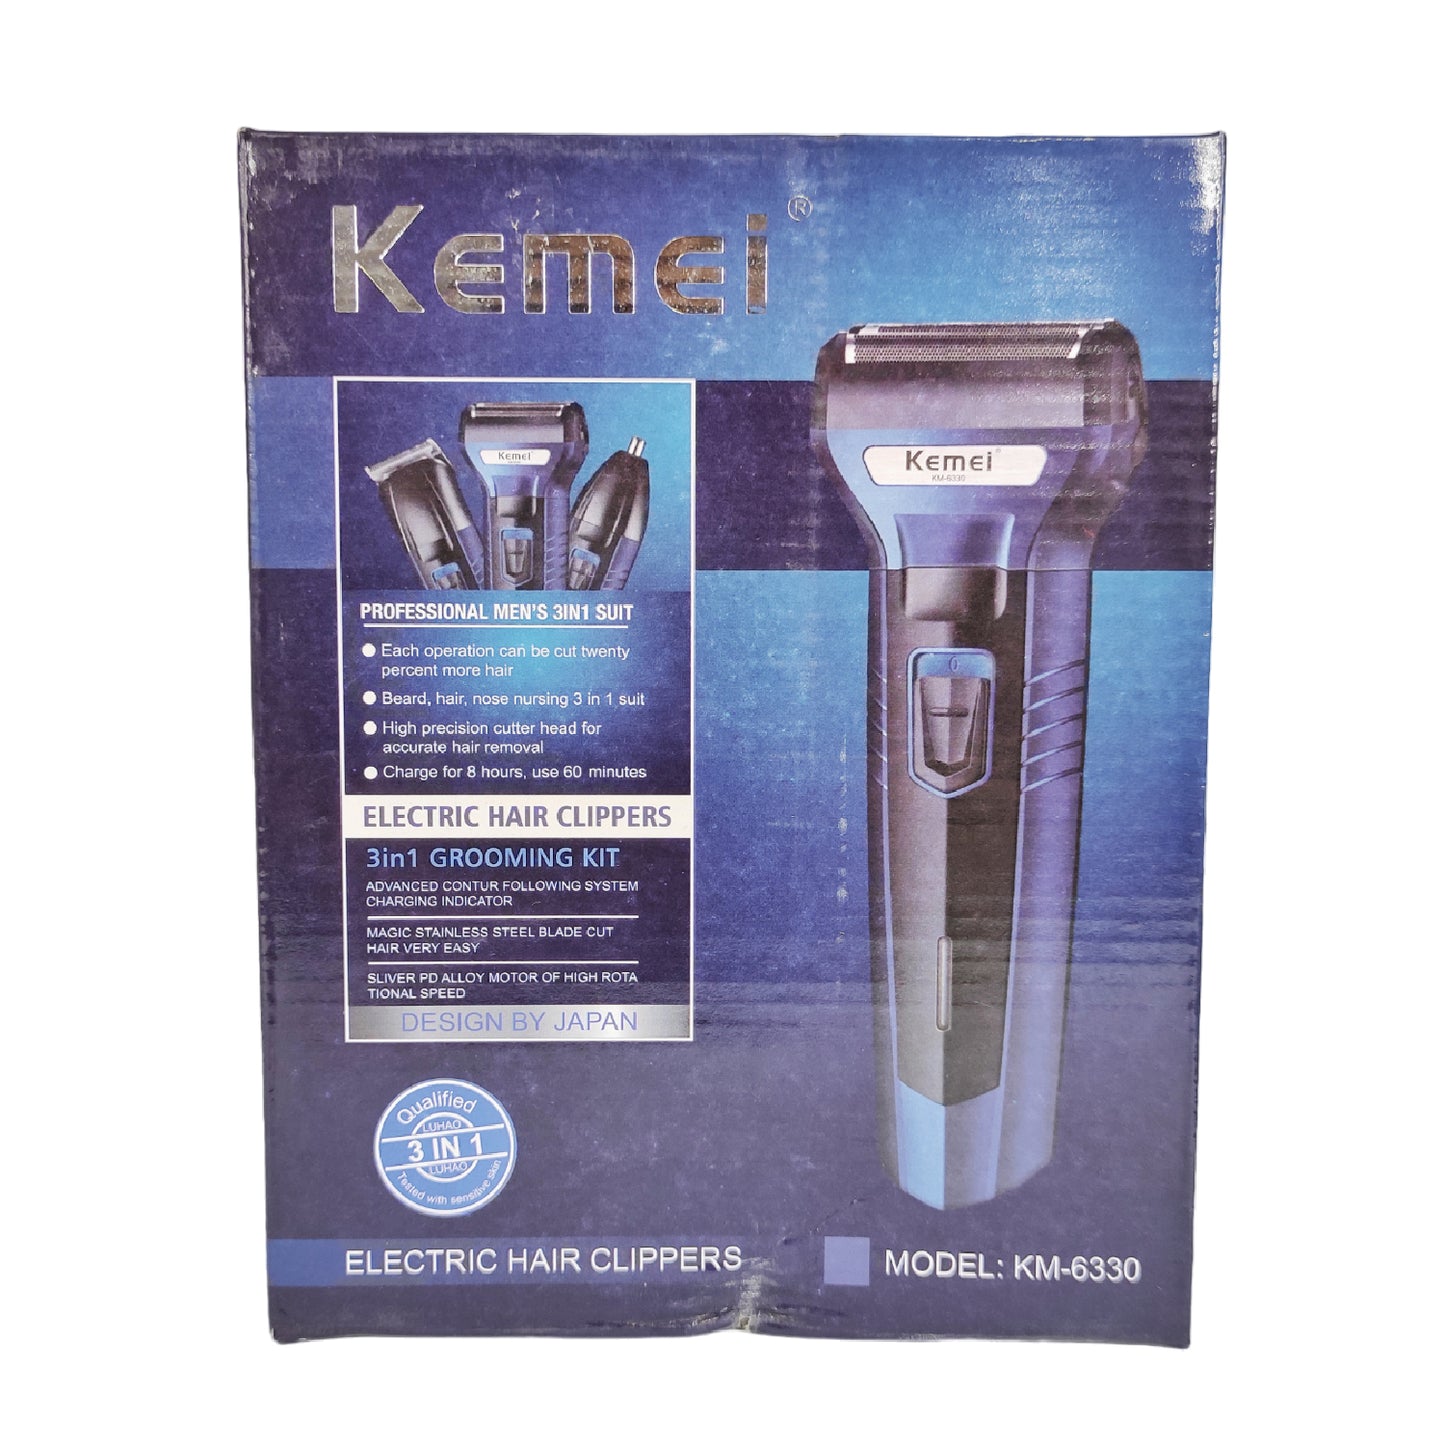 3 in 1 Kemei Hair Clipper KM-6330 - Trimmer - Shaver